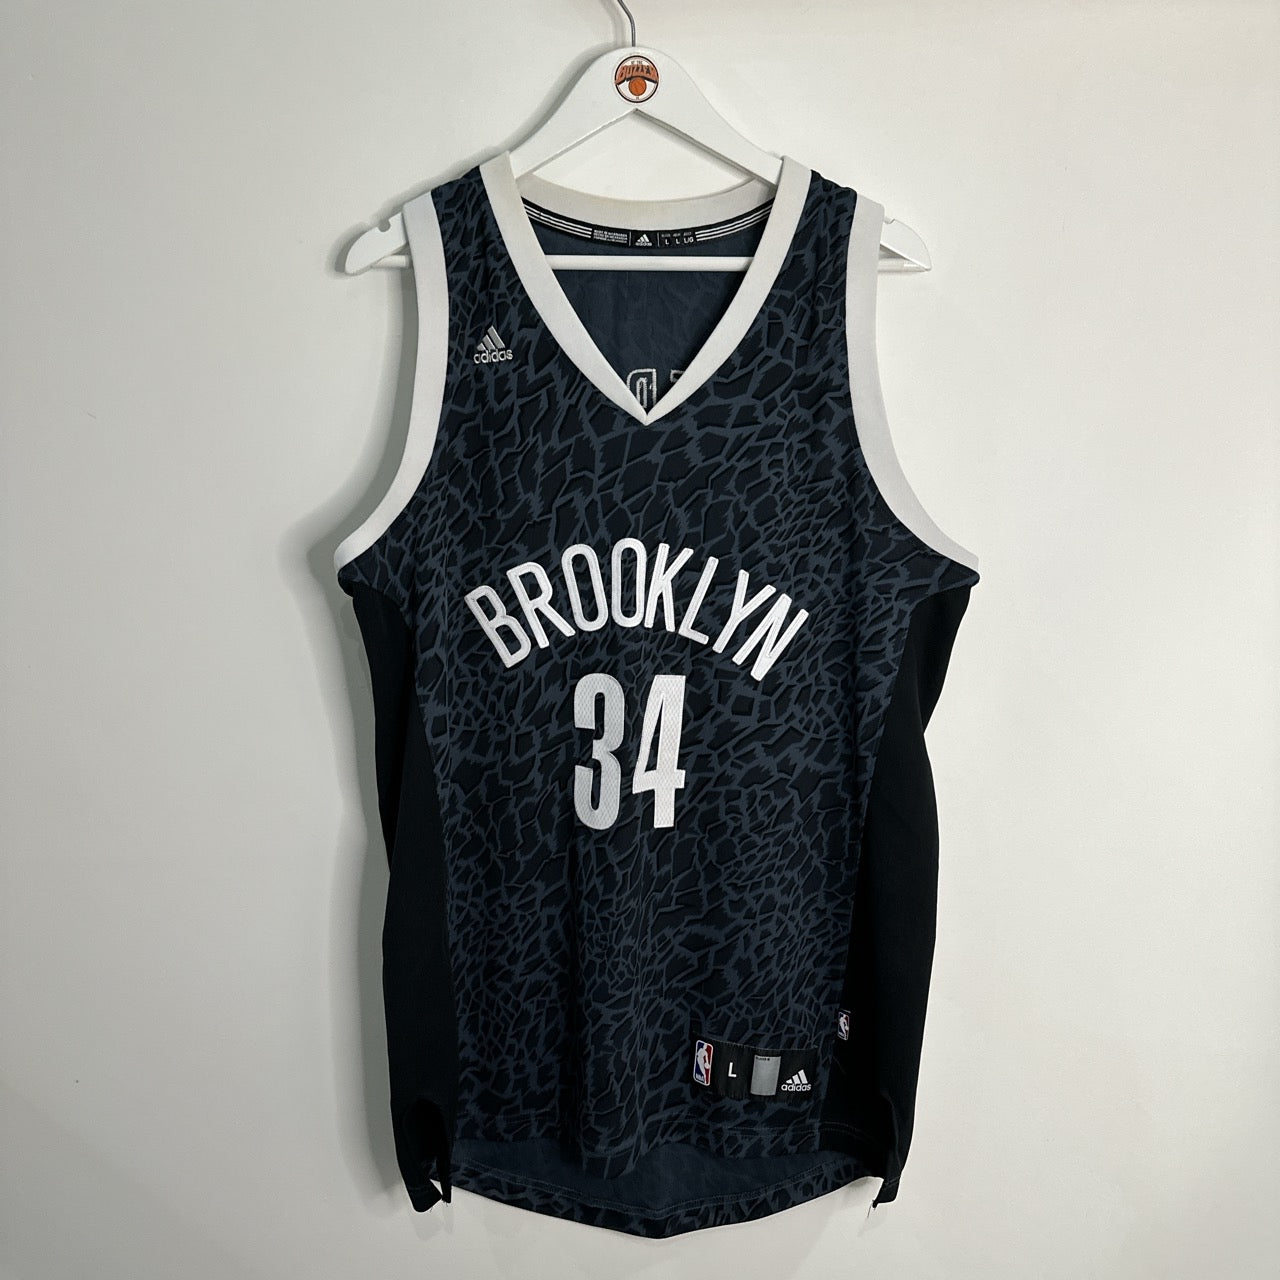 Brooklyn Nets Paul Pierce Adidas jersey - Large